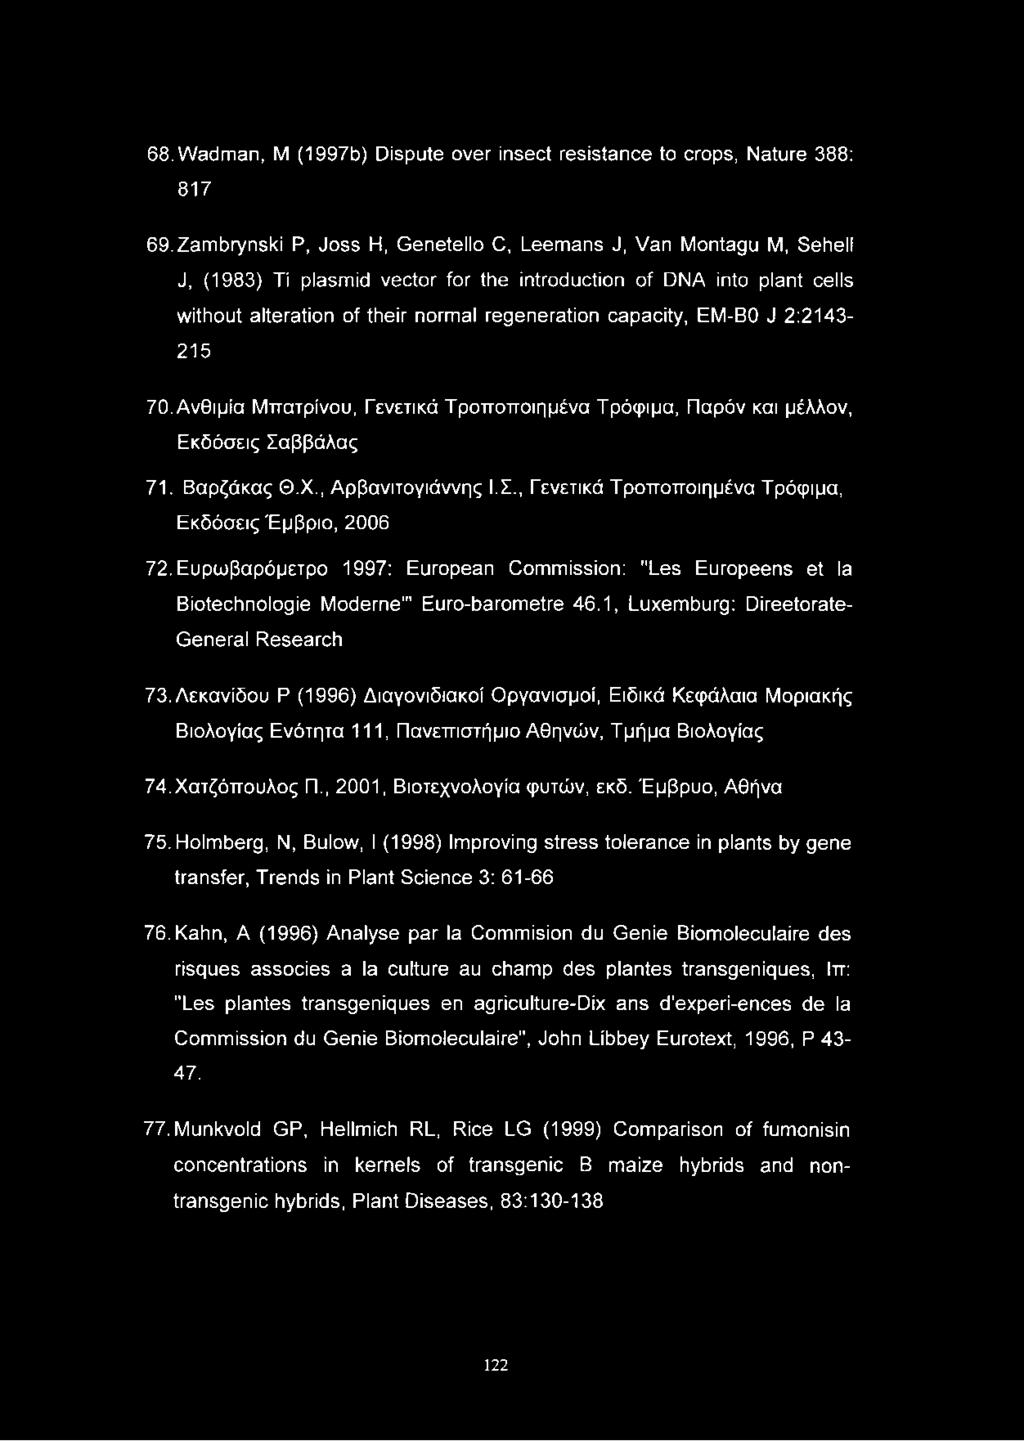 EM-BO J 2:2143-215 70. Ανθιμία Μπατρίνου, Γενετικά Τροποποιημένα Τρόφιμα, Παρόν και μέλλον, Εκδόσεις Σαββάλας 71. Βαρζάκας Θ.Χ., Αρβανιτογιάννης Ι.Σ., Γενετικά Τροποποιημένα Τρόφιμα, Εκδόσεις Έμβριο, 2006 72.